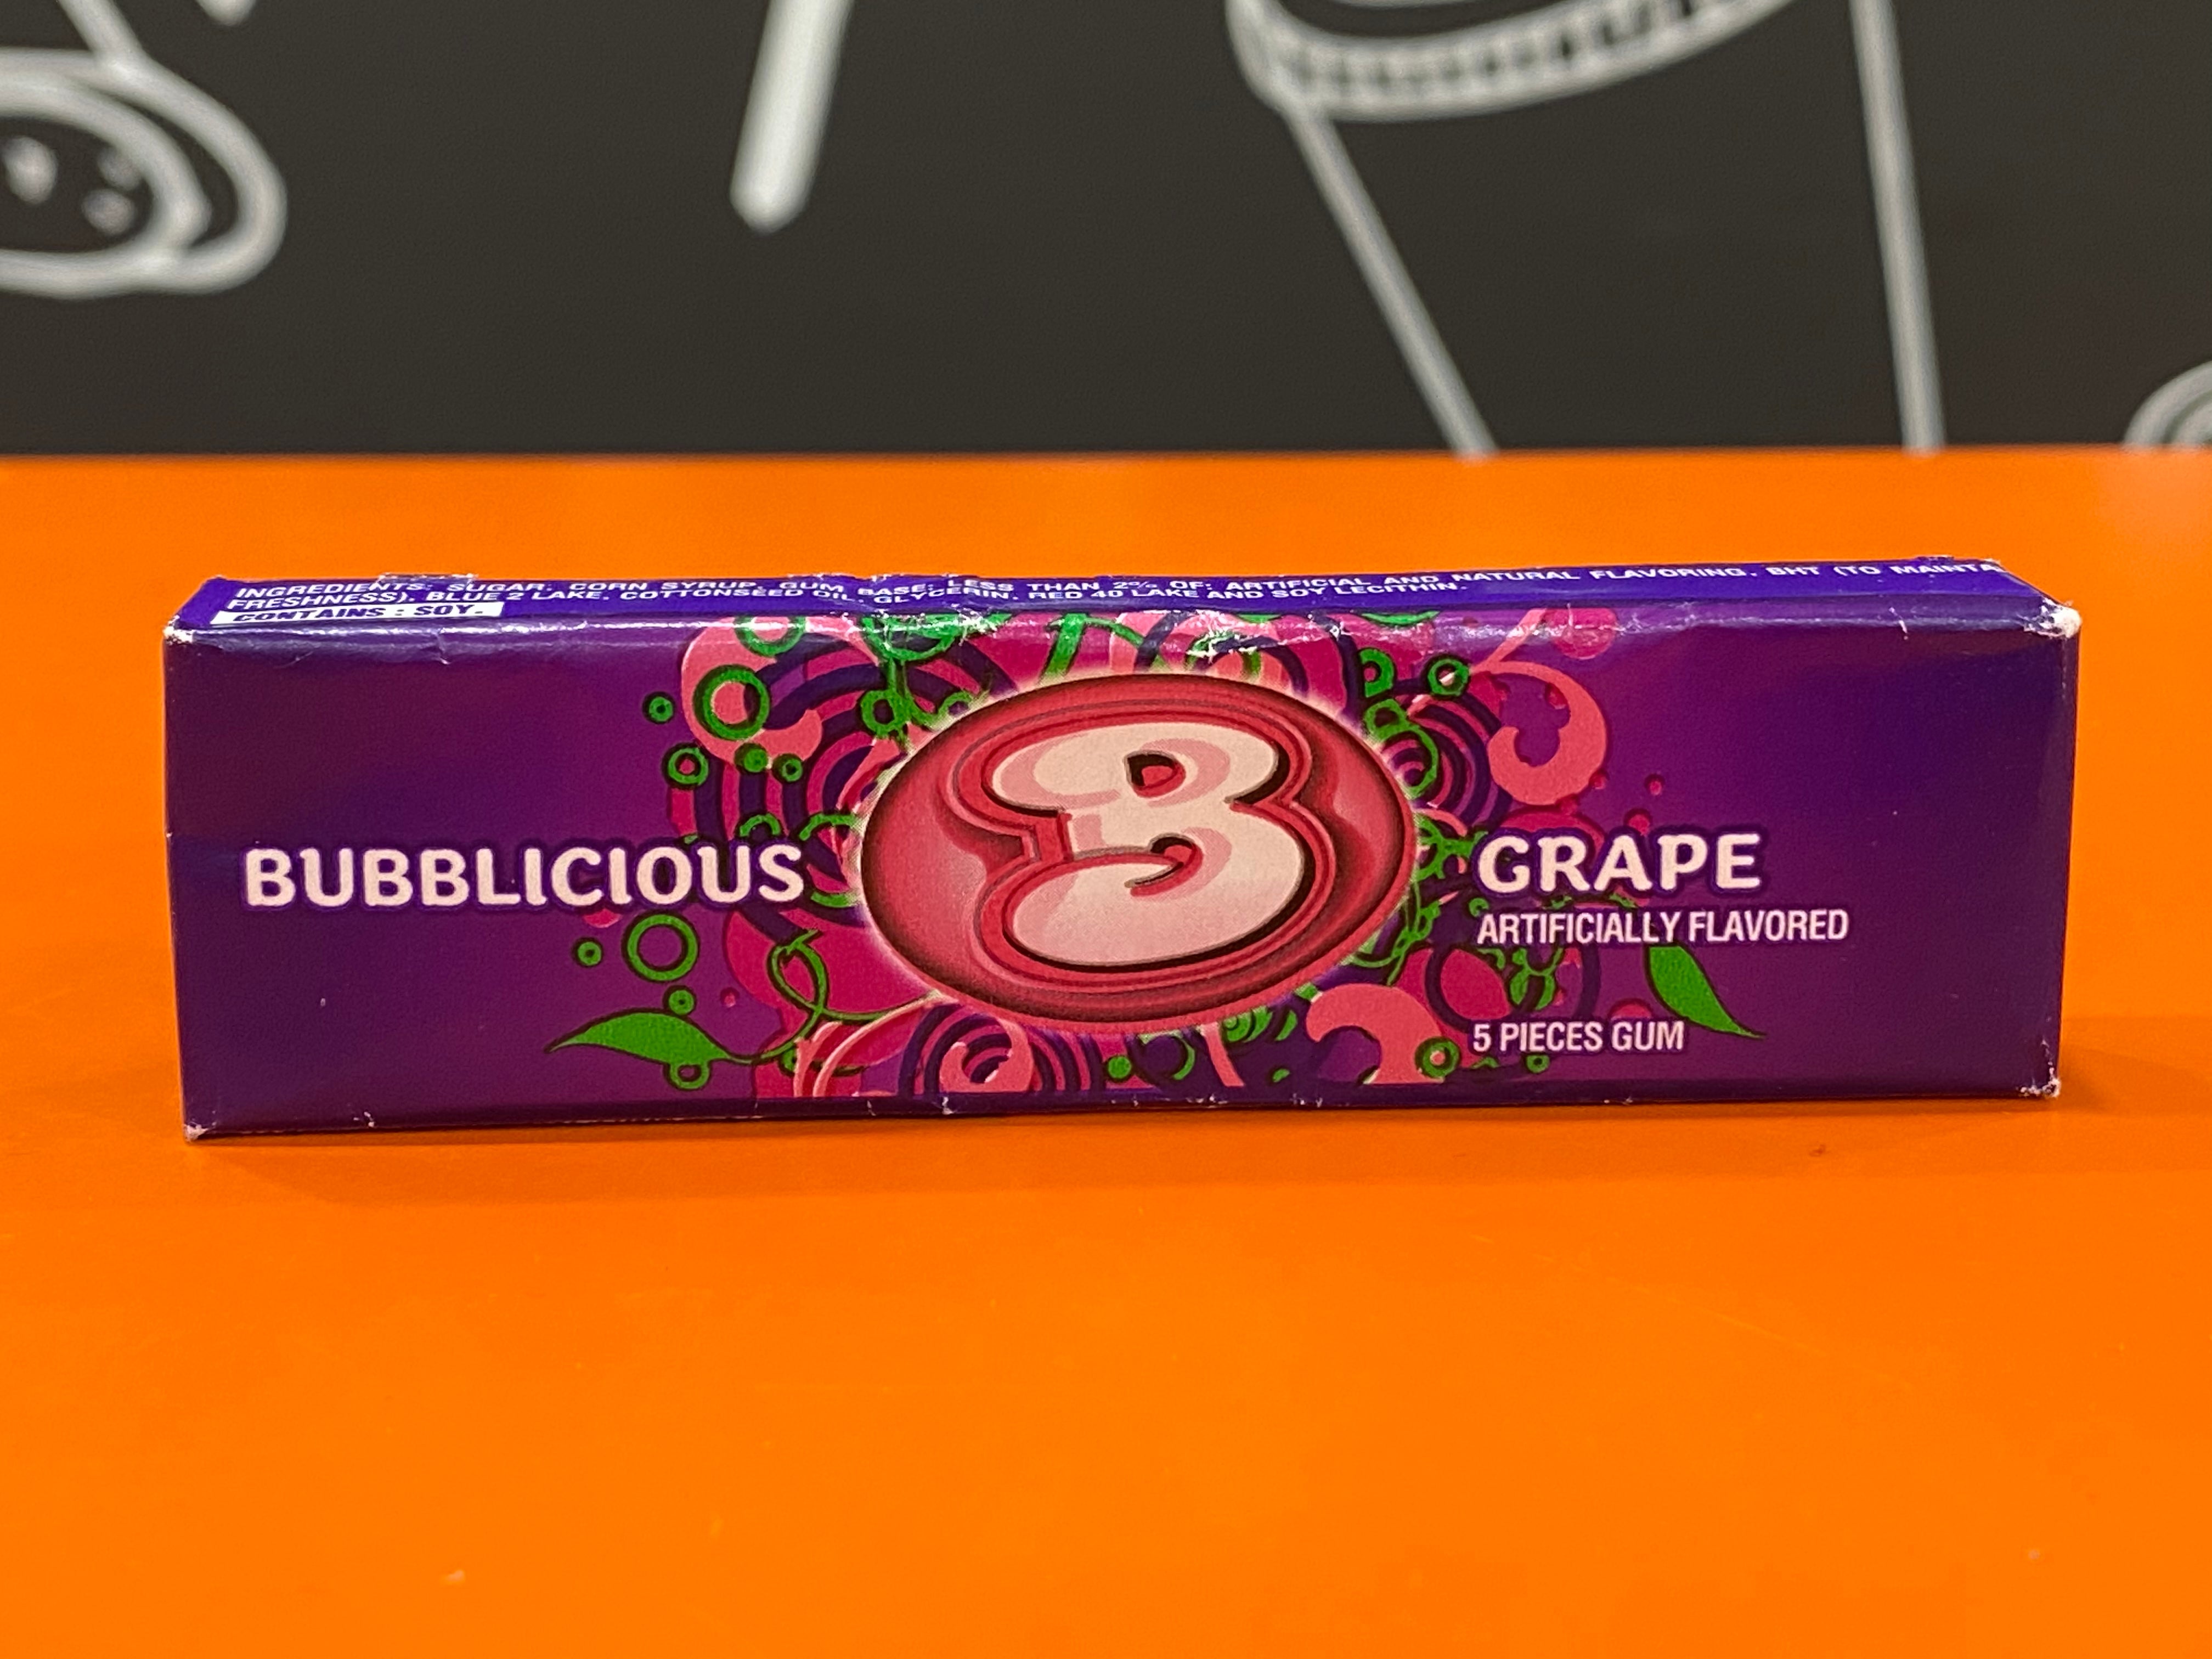 Bubblicious Grape